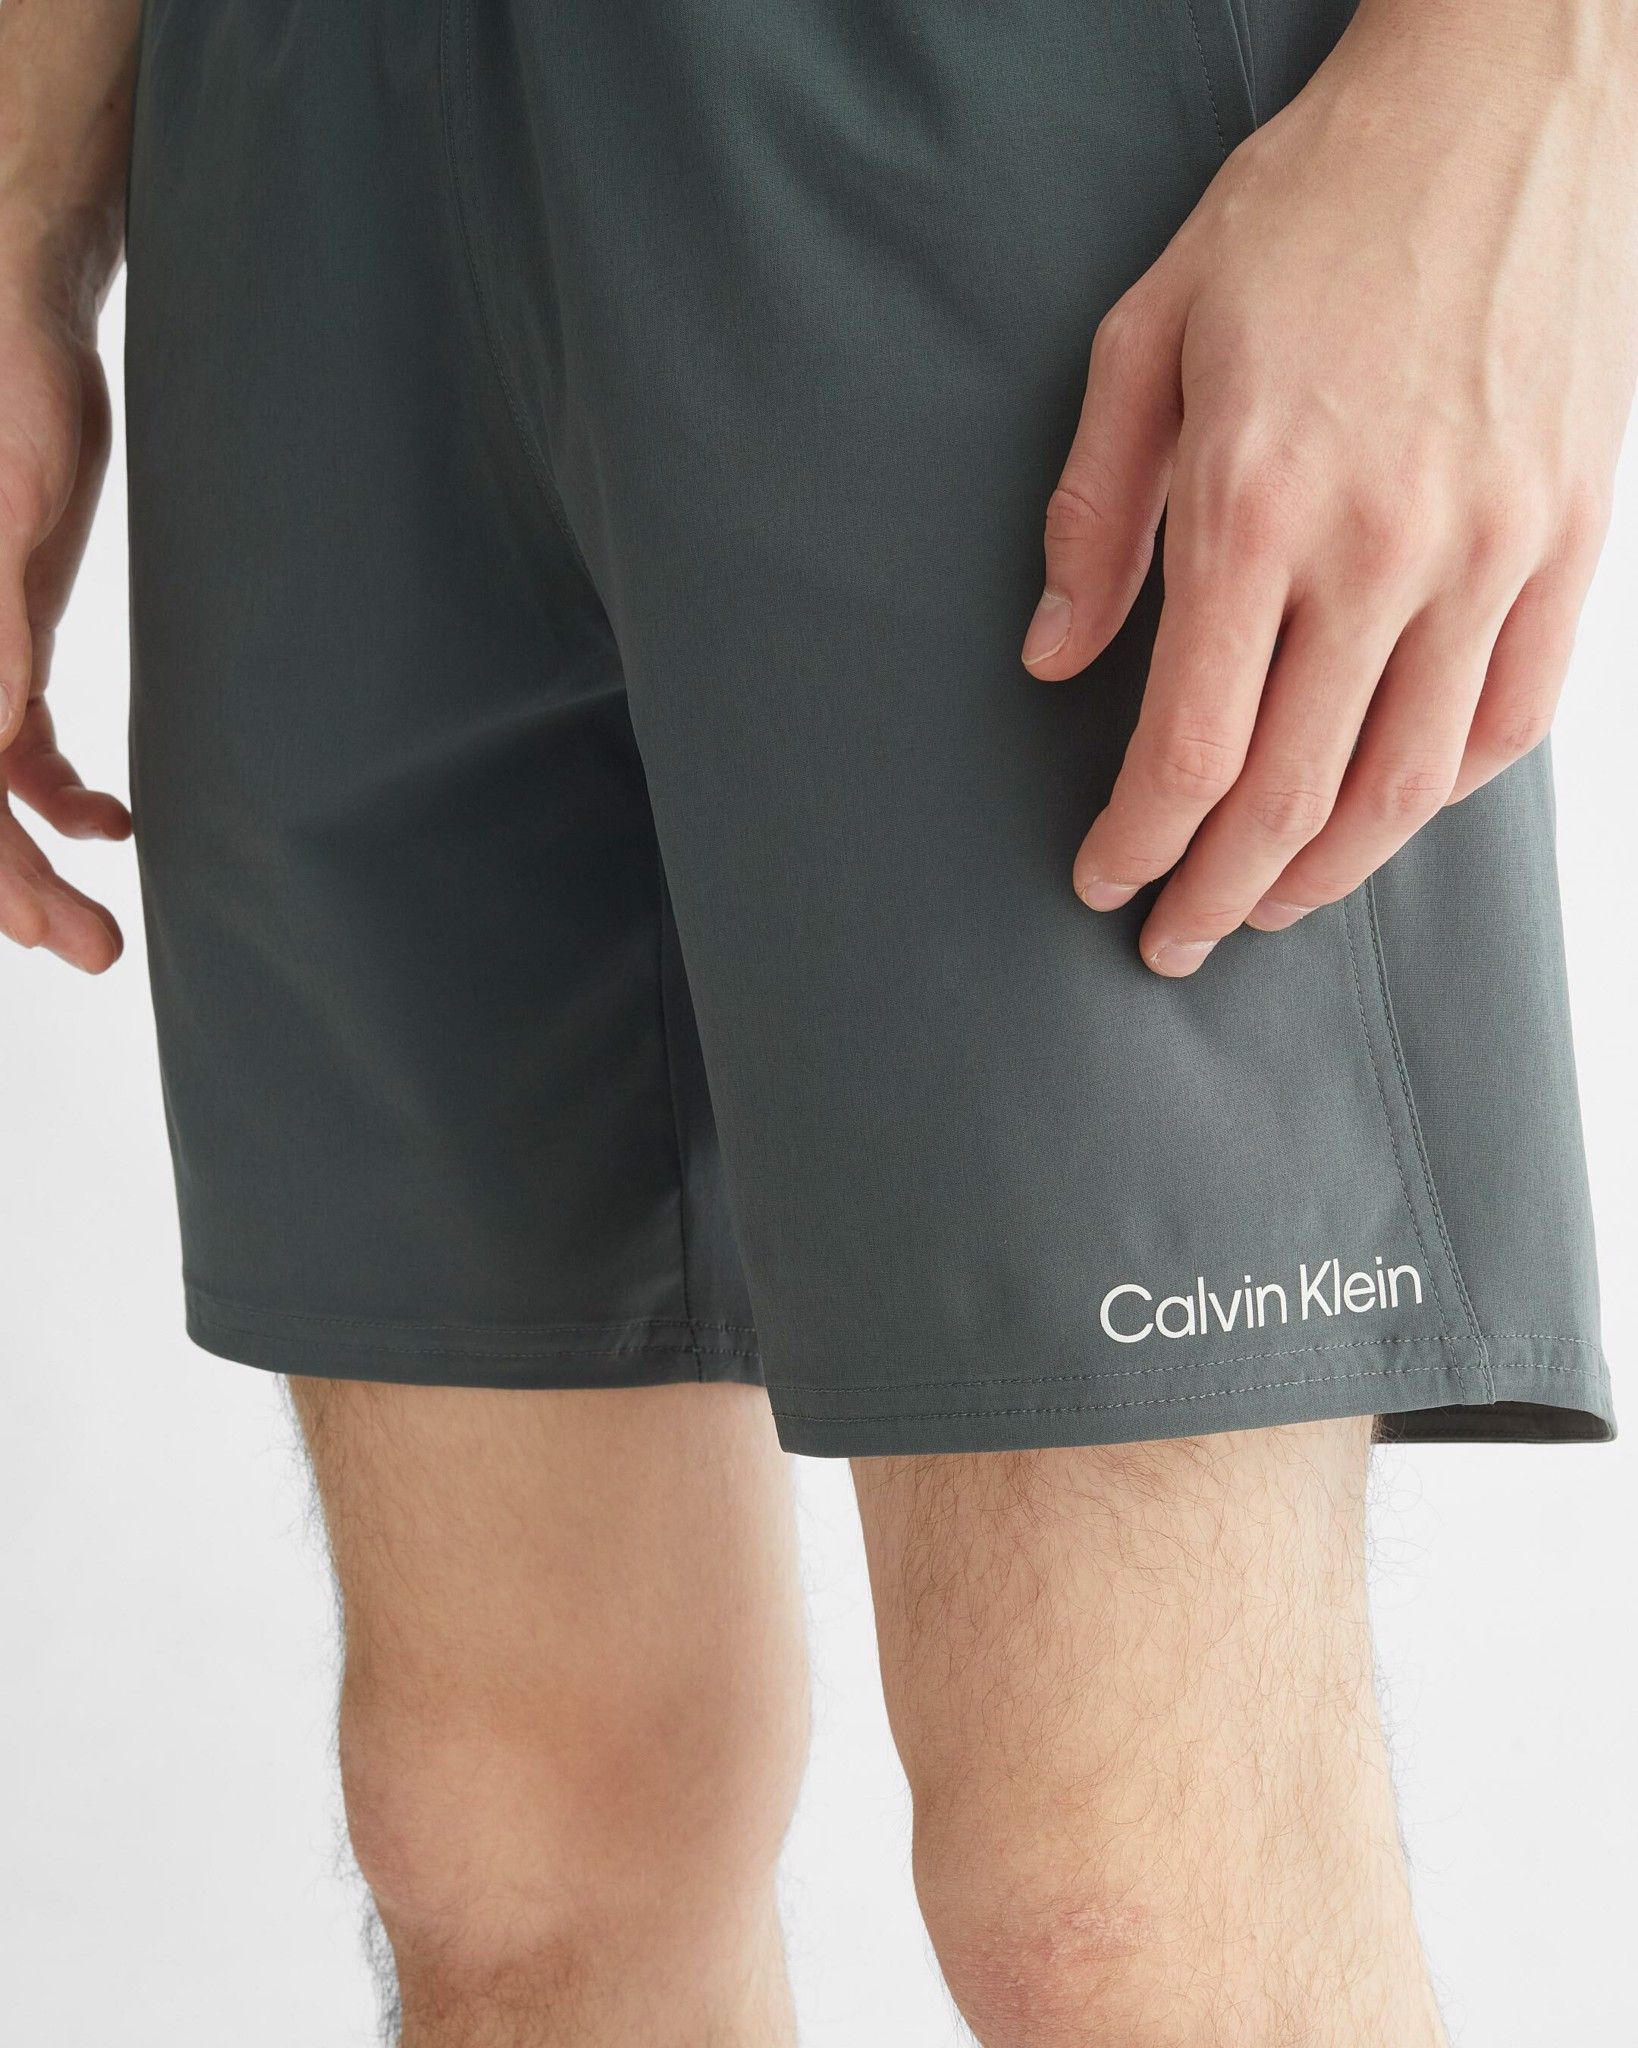 Calvin Klein - Quần ngắn thể thao nam Woven Short 4M23-S800 – ULA Vietnam